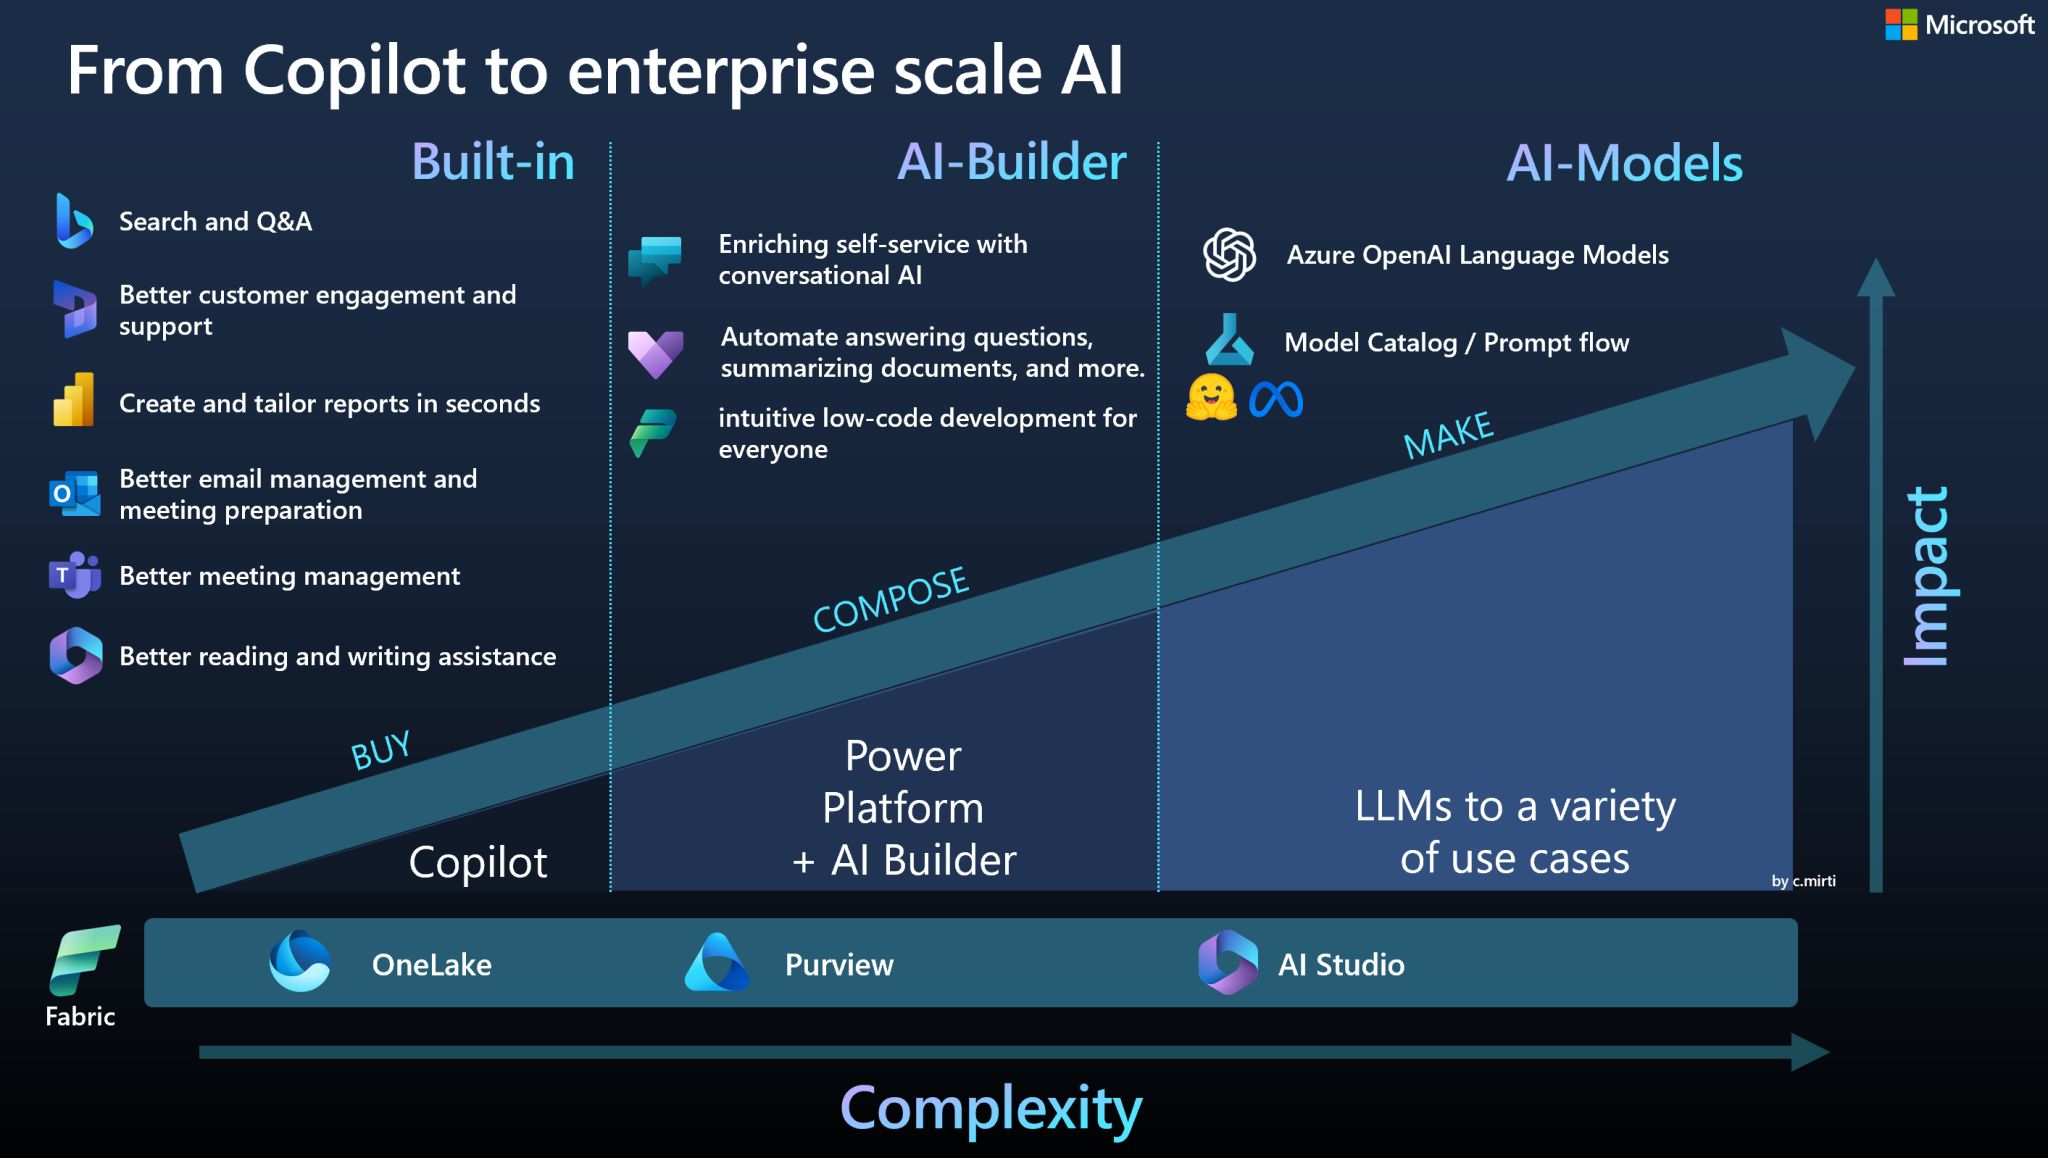 From Copilot to Enterprise Scale AI